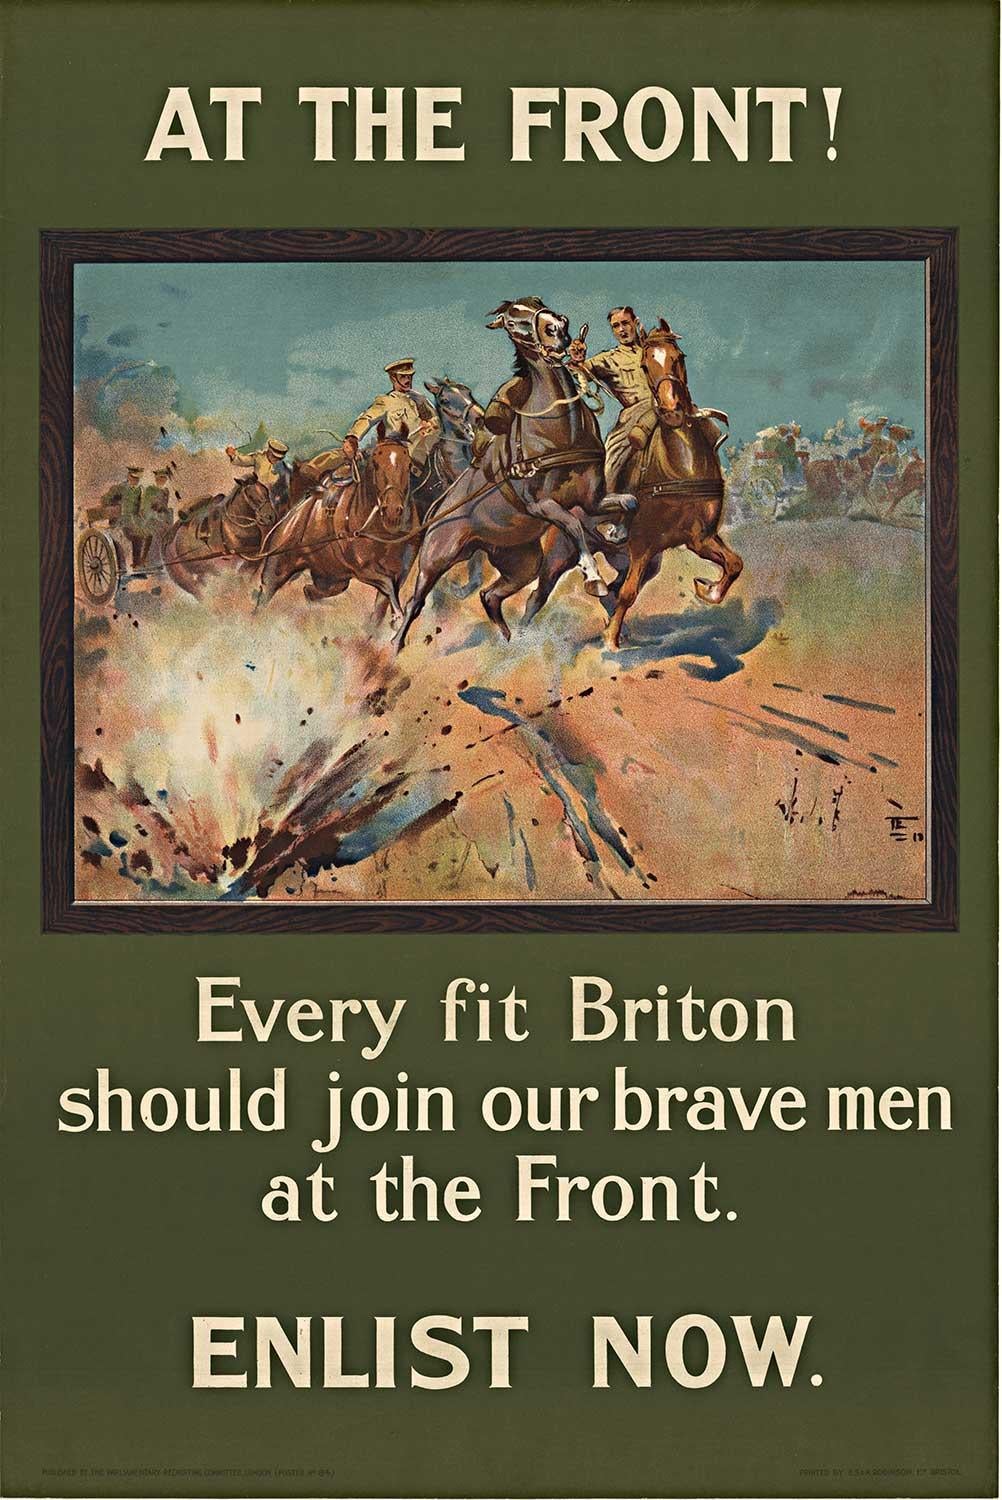 Lionel Edwards Animal Print - Original "At The Front!  Enlist Now" British vintage poster